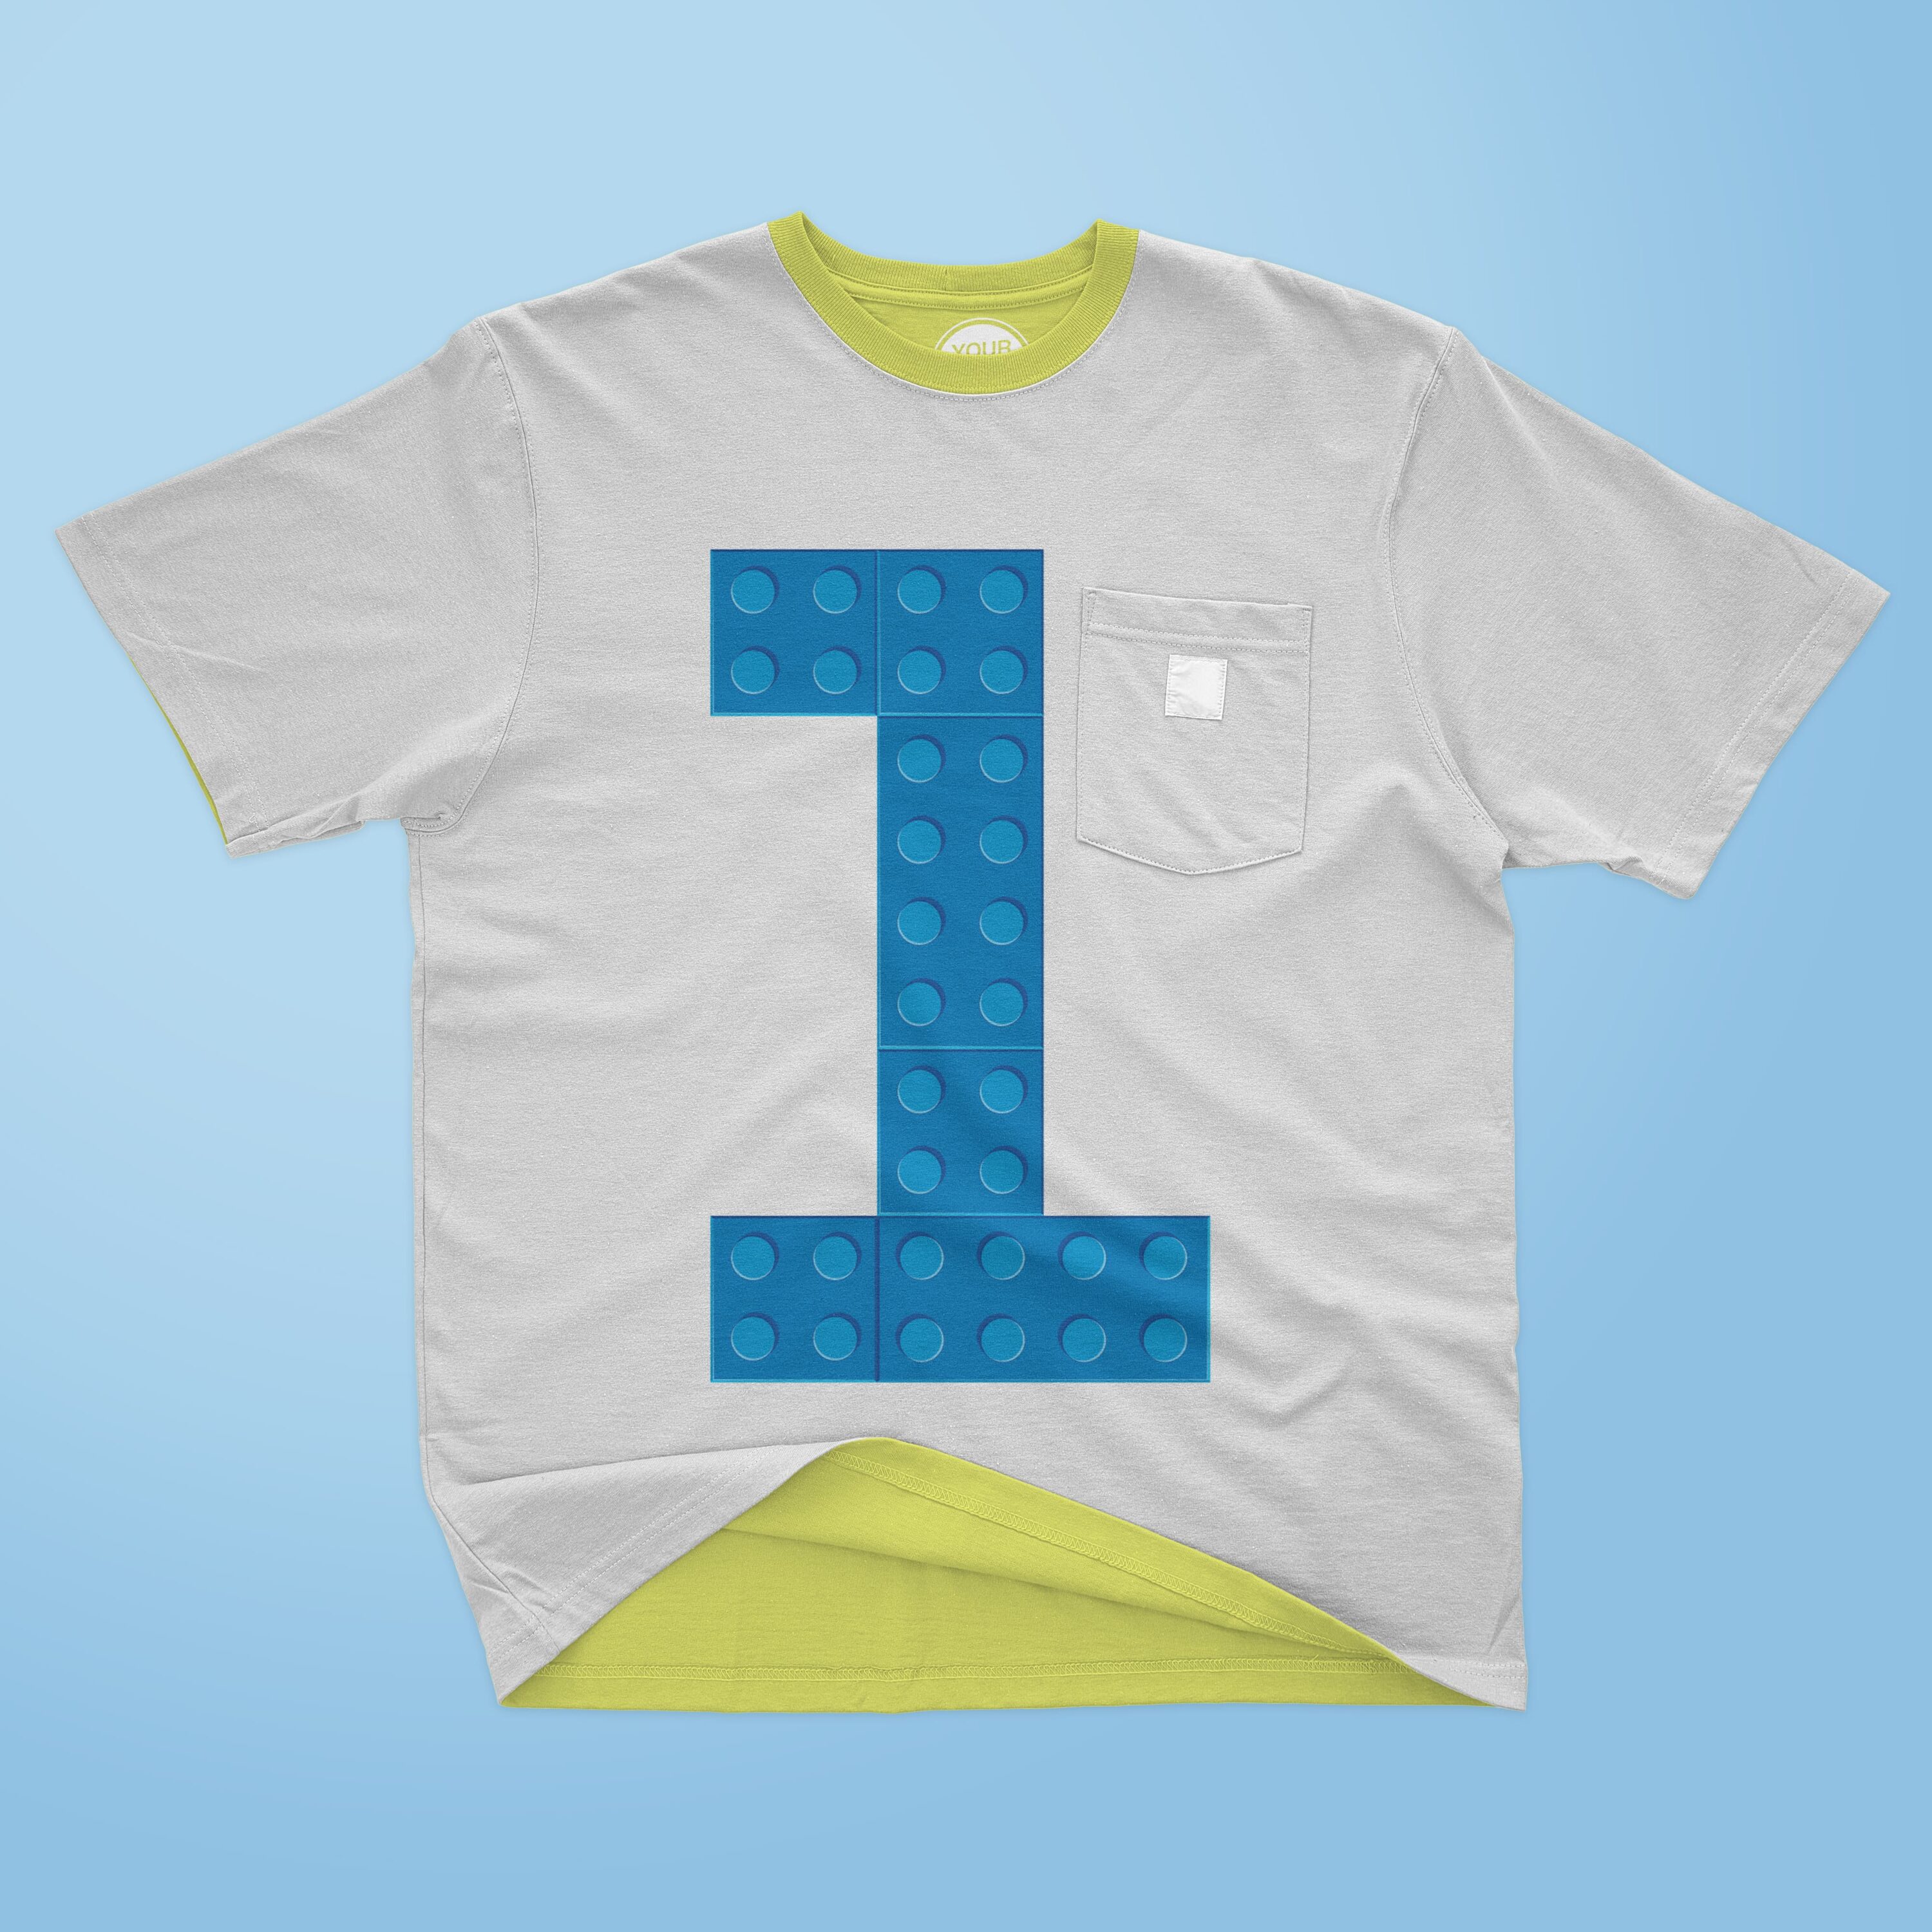 Number 1 made from blue lego bricks - t-shirt design.